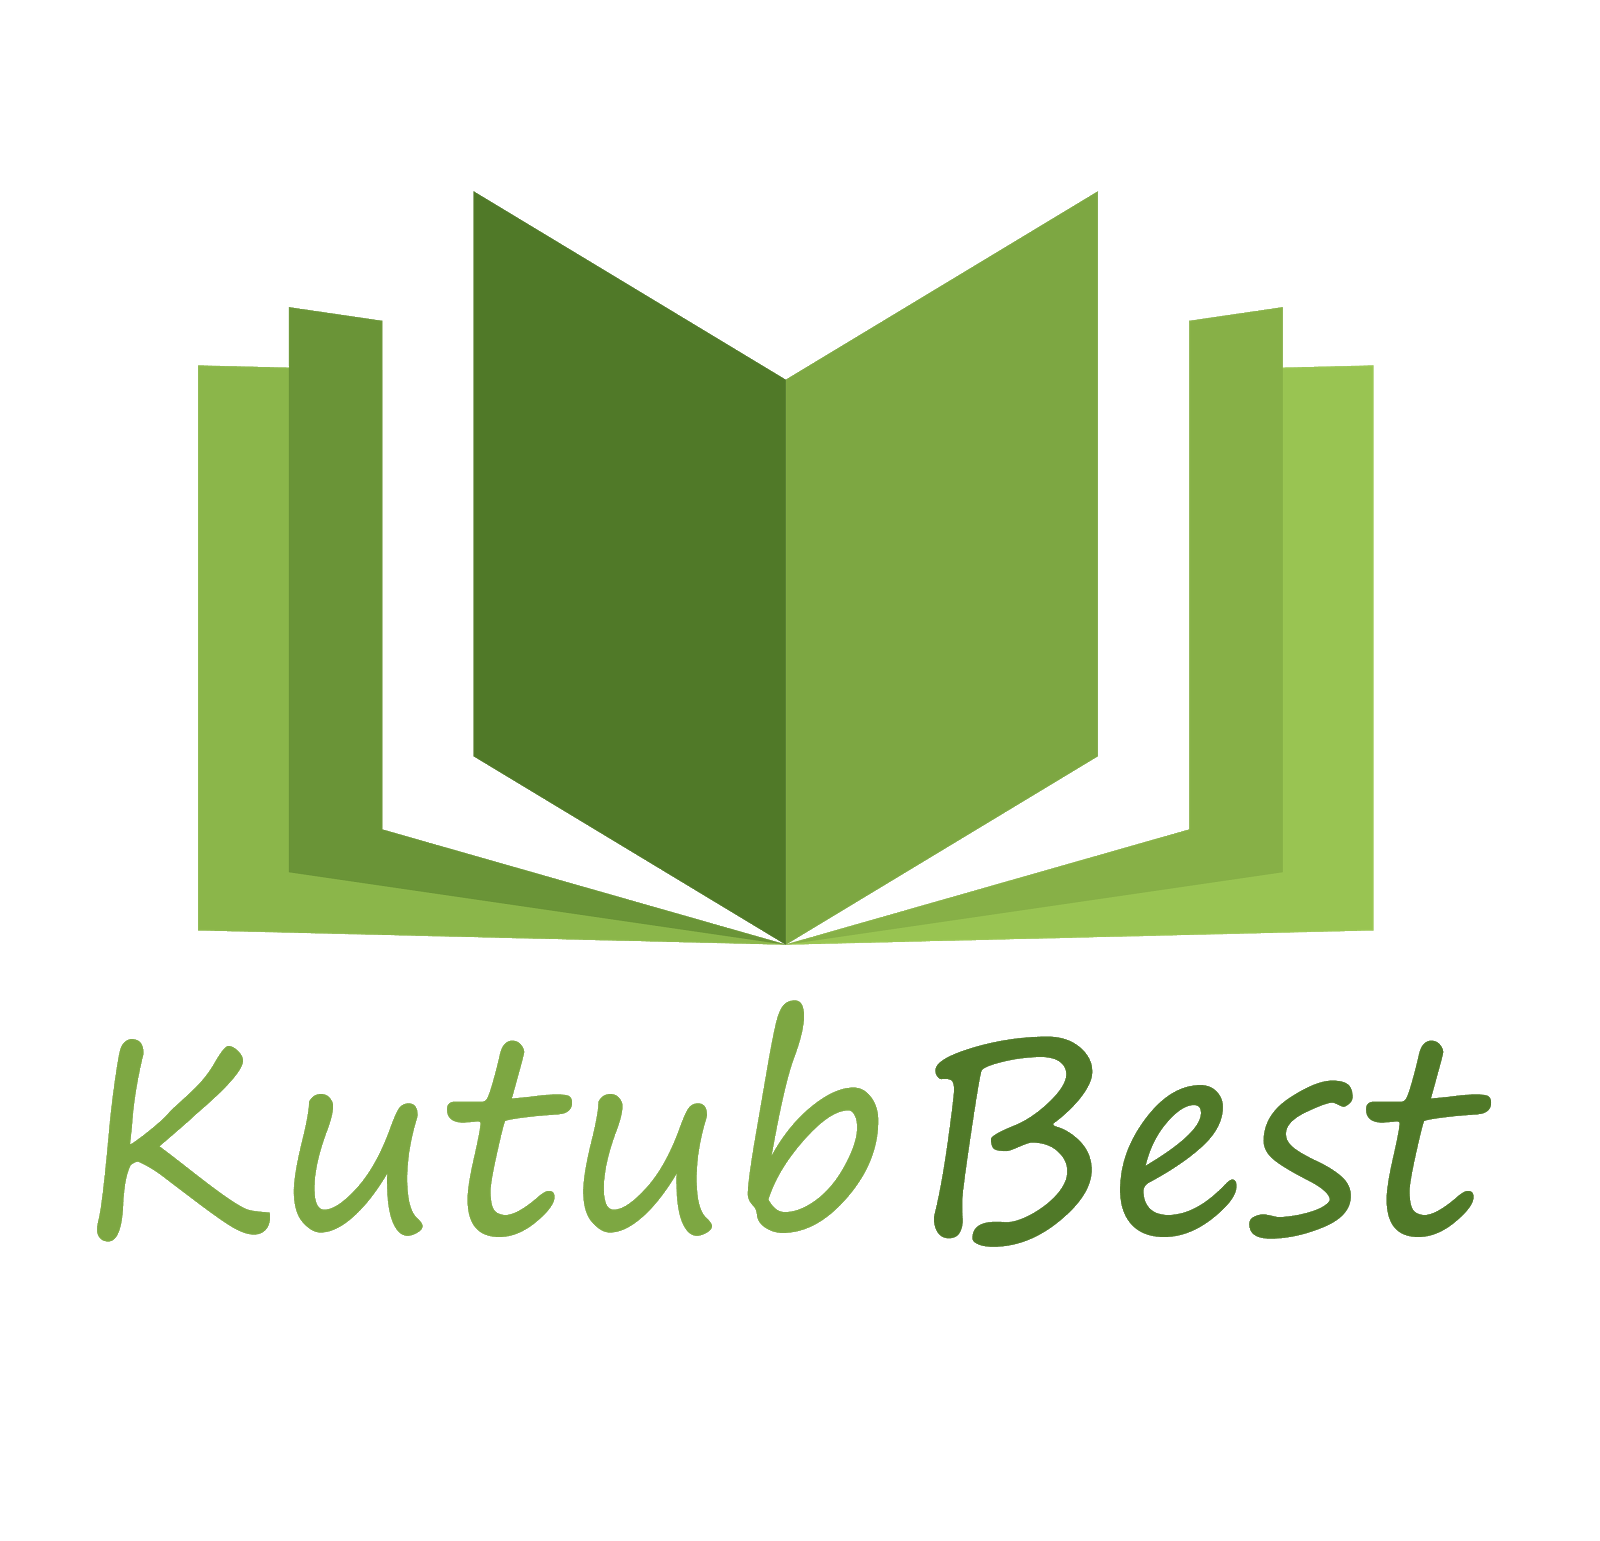 Kutub Best